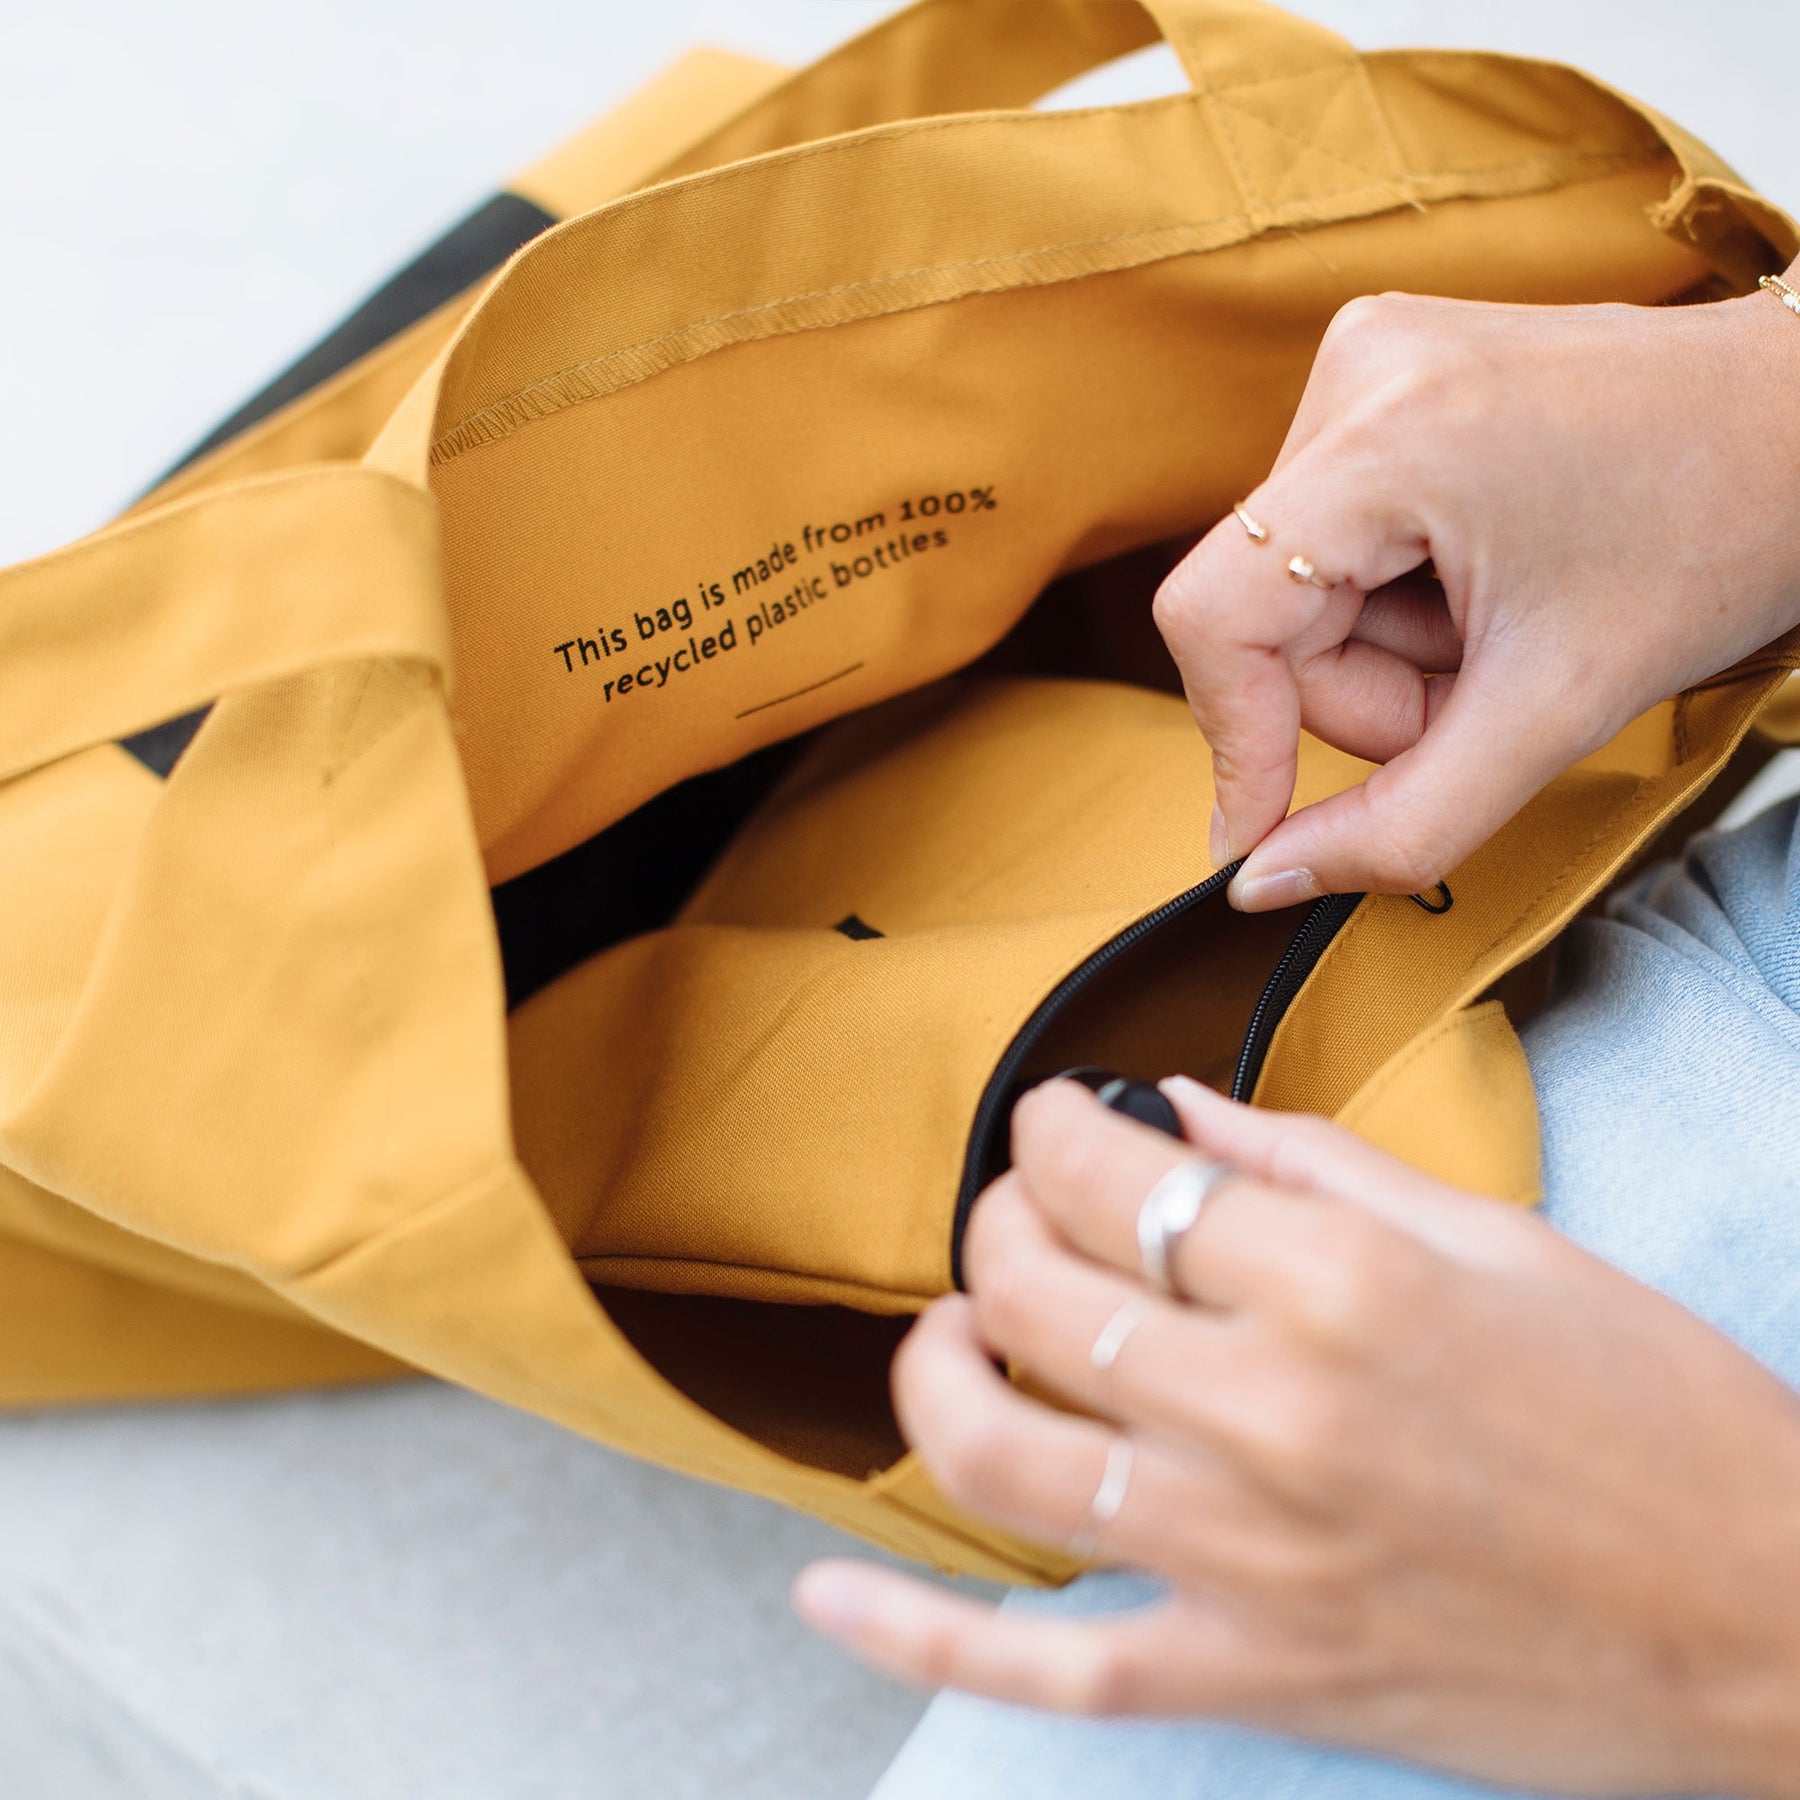 The 10 Best Trolley Sleeve Bags – KNOMO